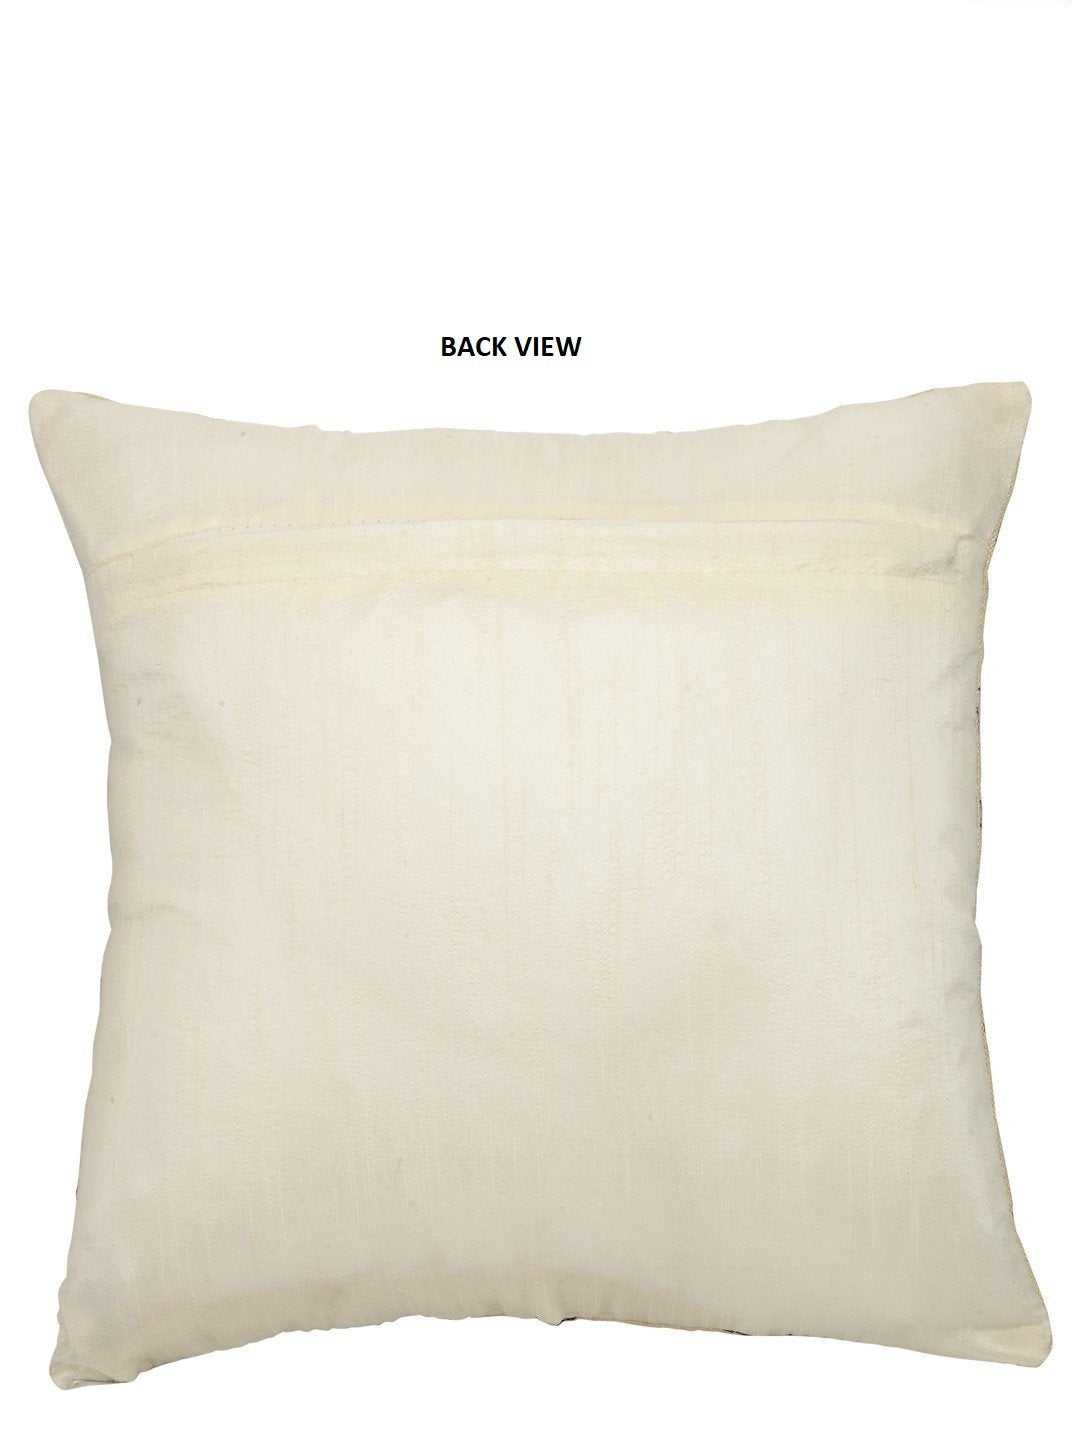 Cushion Covers: 5 Decorative Hand Made Jute Throw/Pillow Cushion Covers